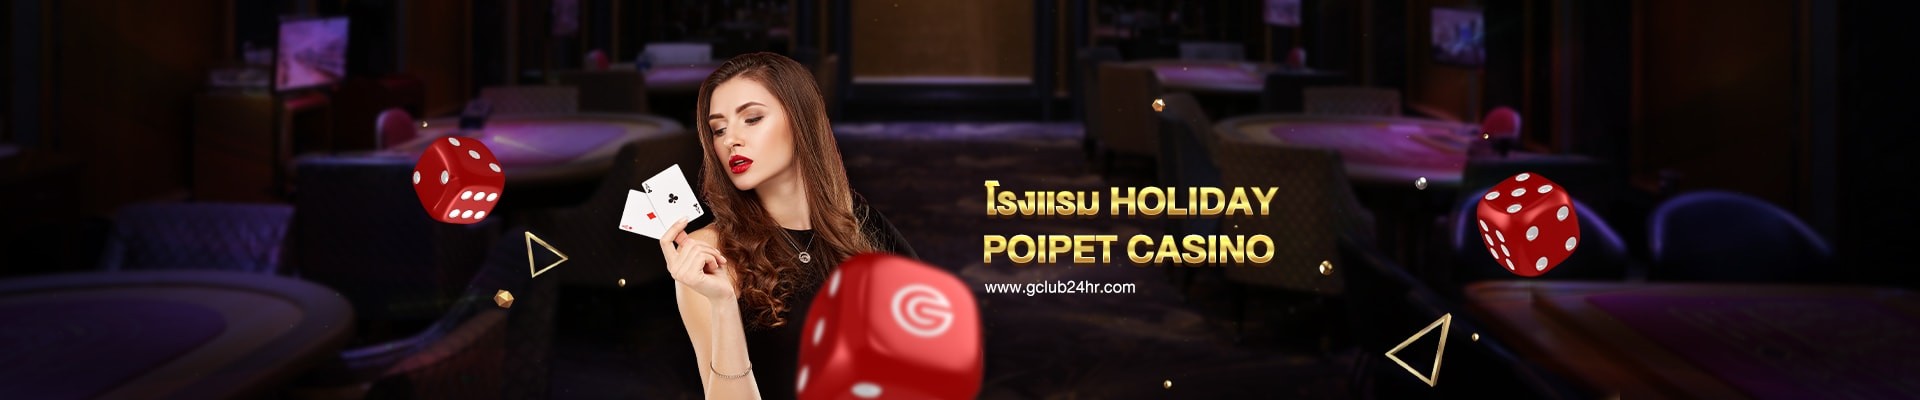 gclub24hr_casino_online_holiday_poipet_casino